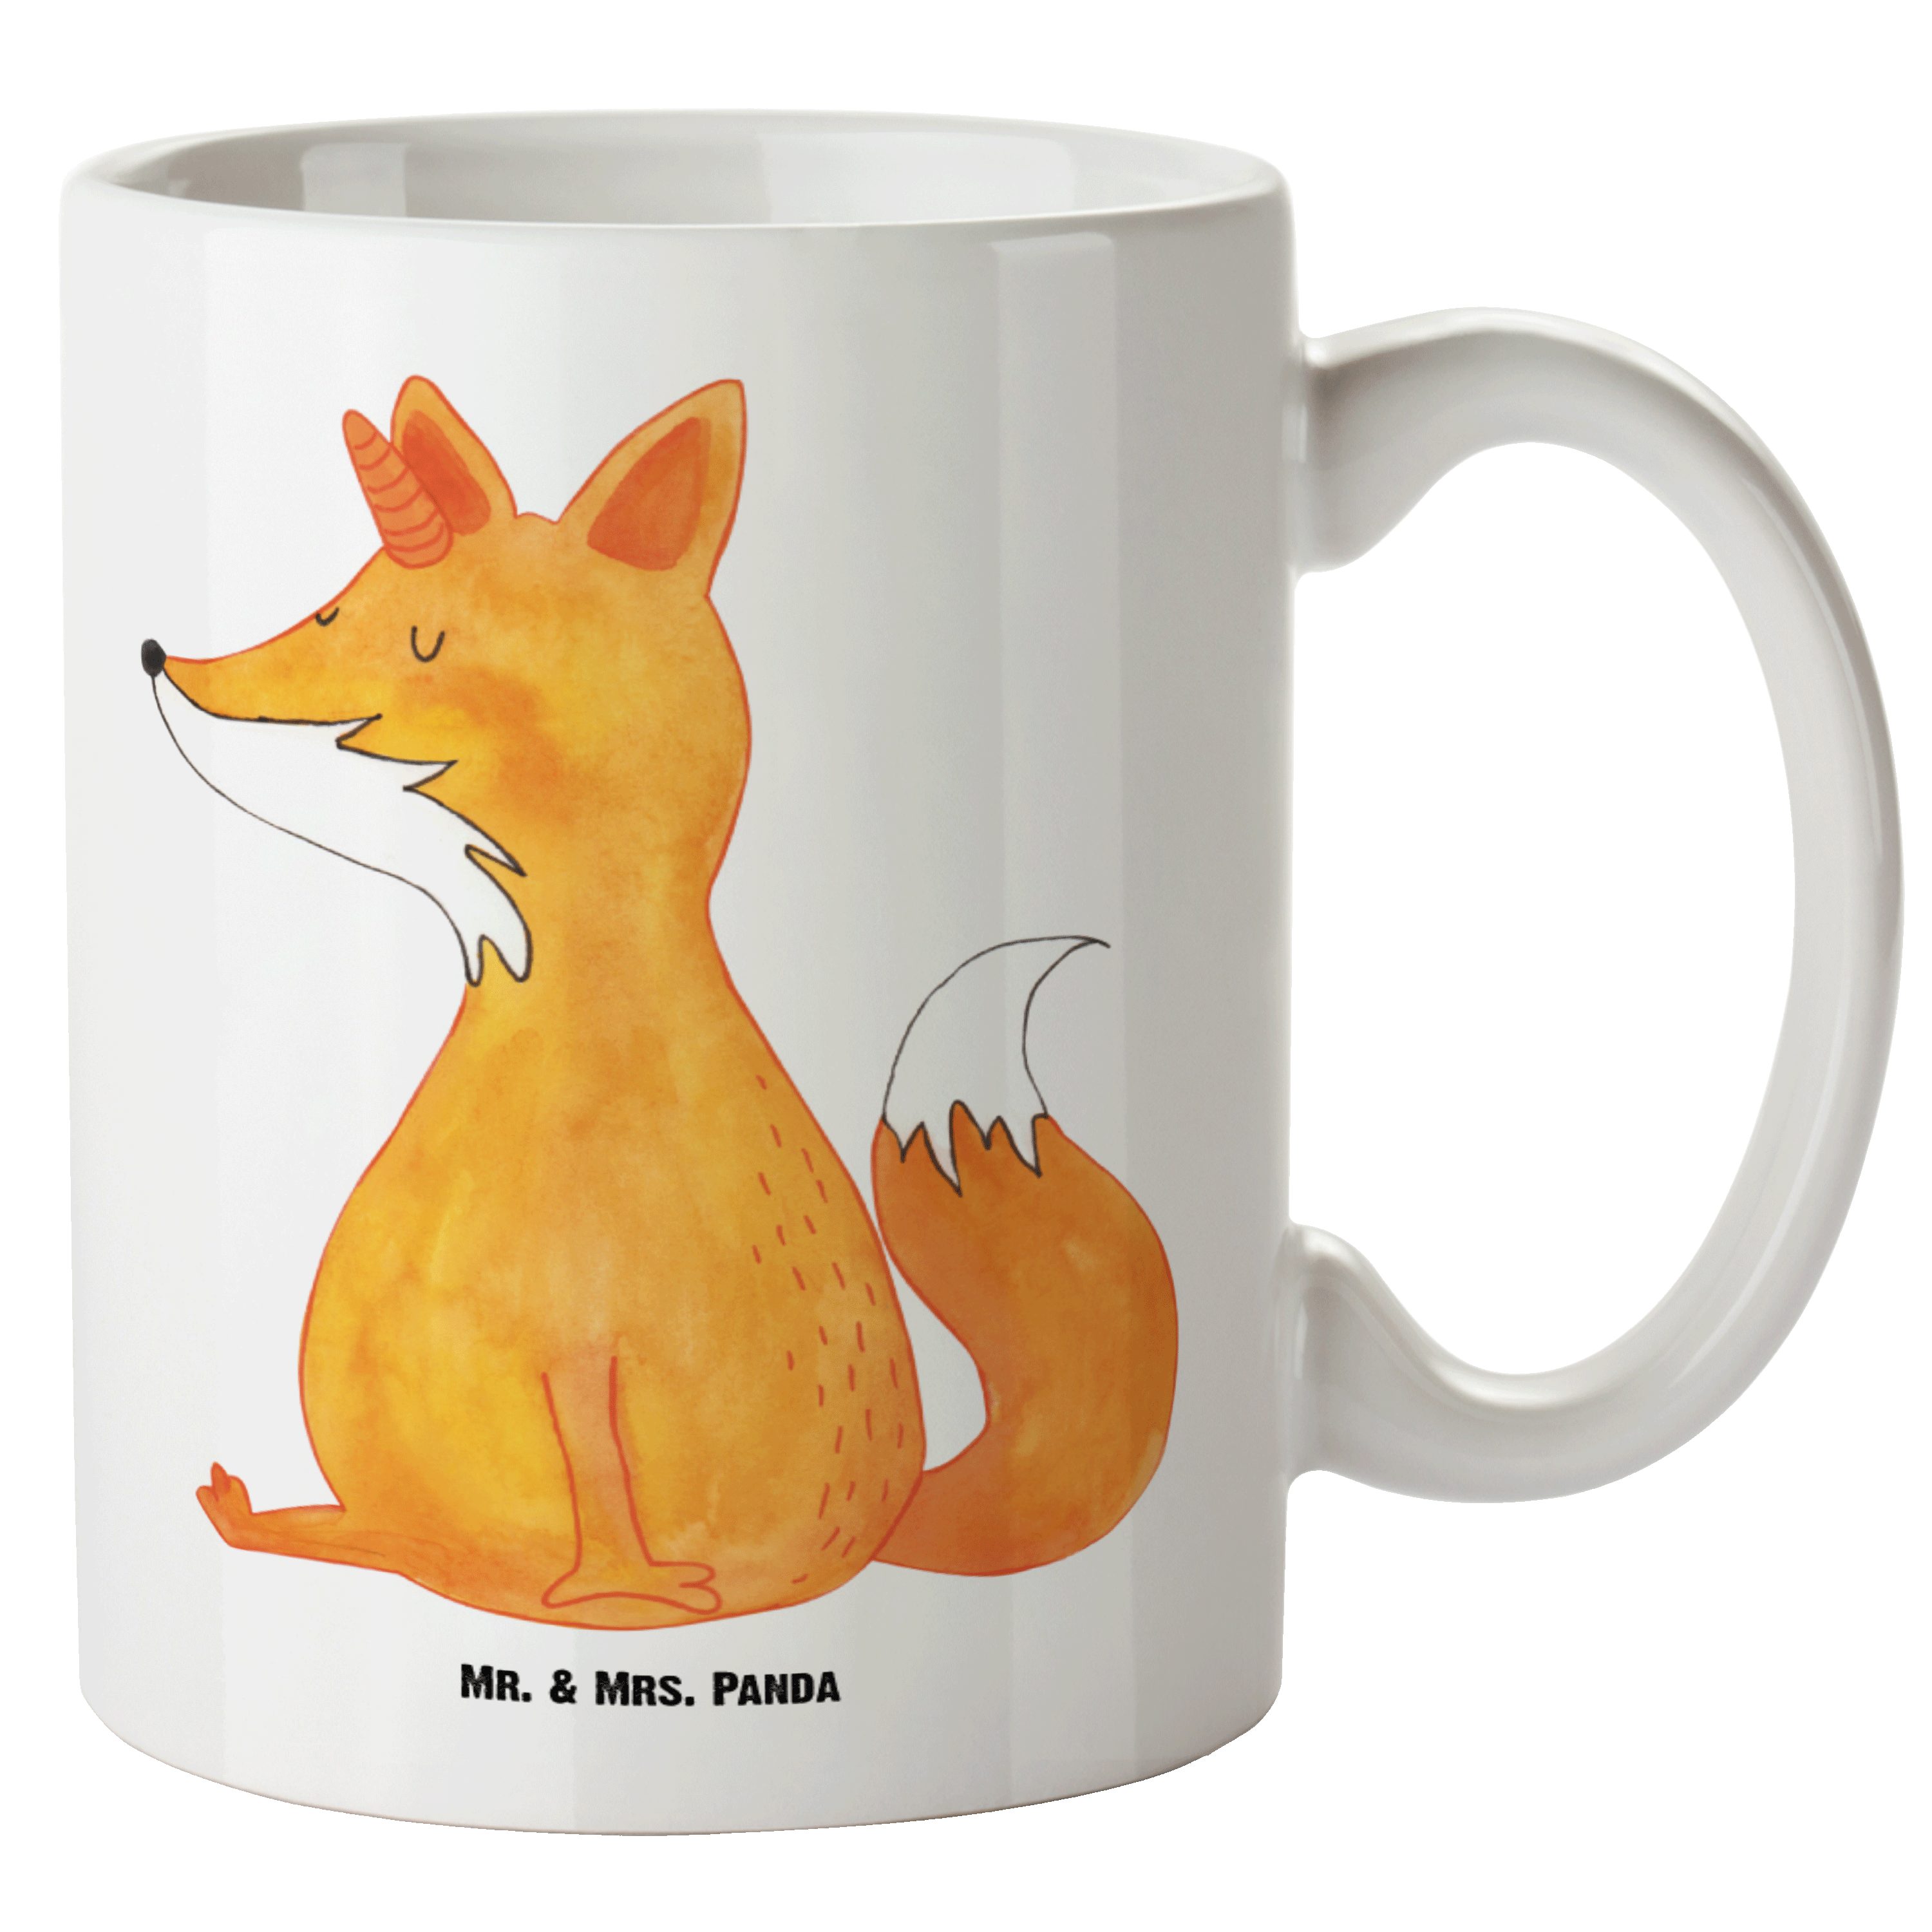 Kaffeetasse, Wunsch Mr. Tasse Weiß - Mrs. Einhorn, Grosse Fuchshörnchen Panda & Tasse Keramik XL - Geschenk,